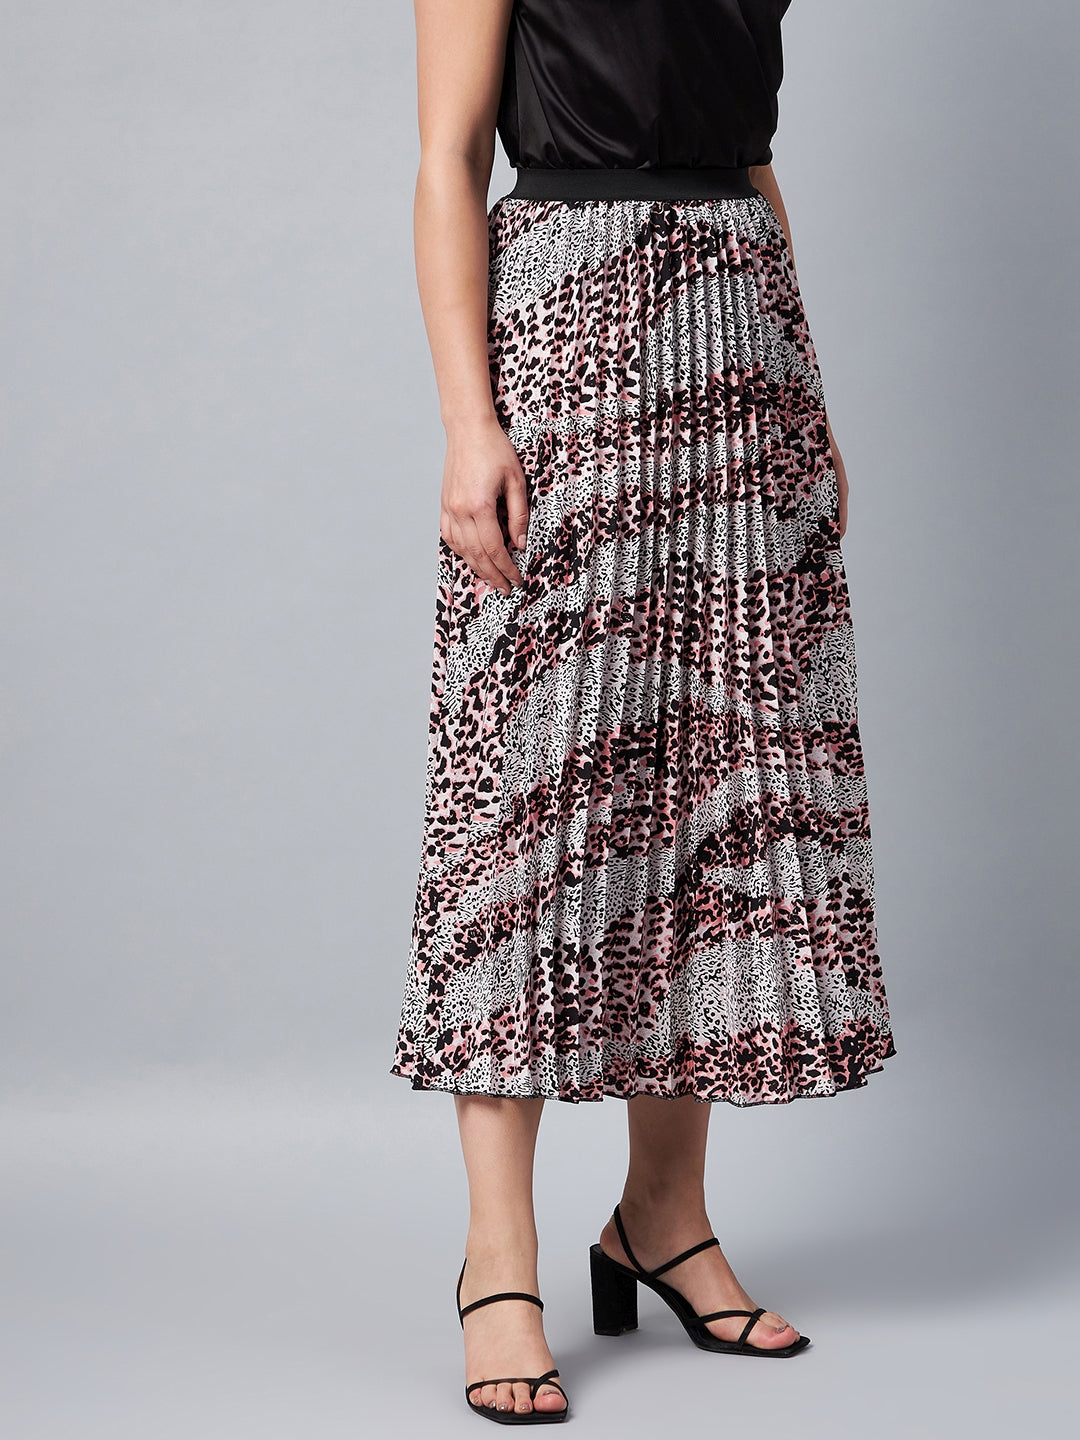 Women's Animal Print Pleated Skirt